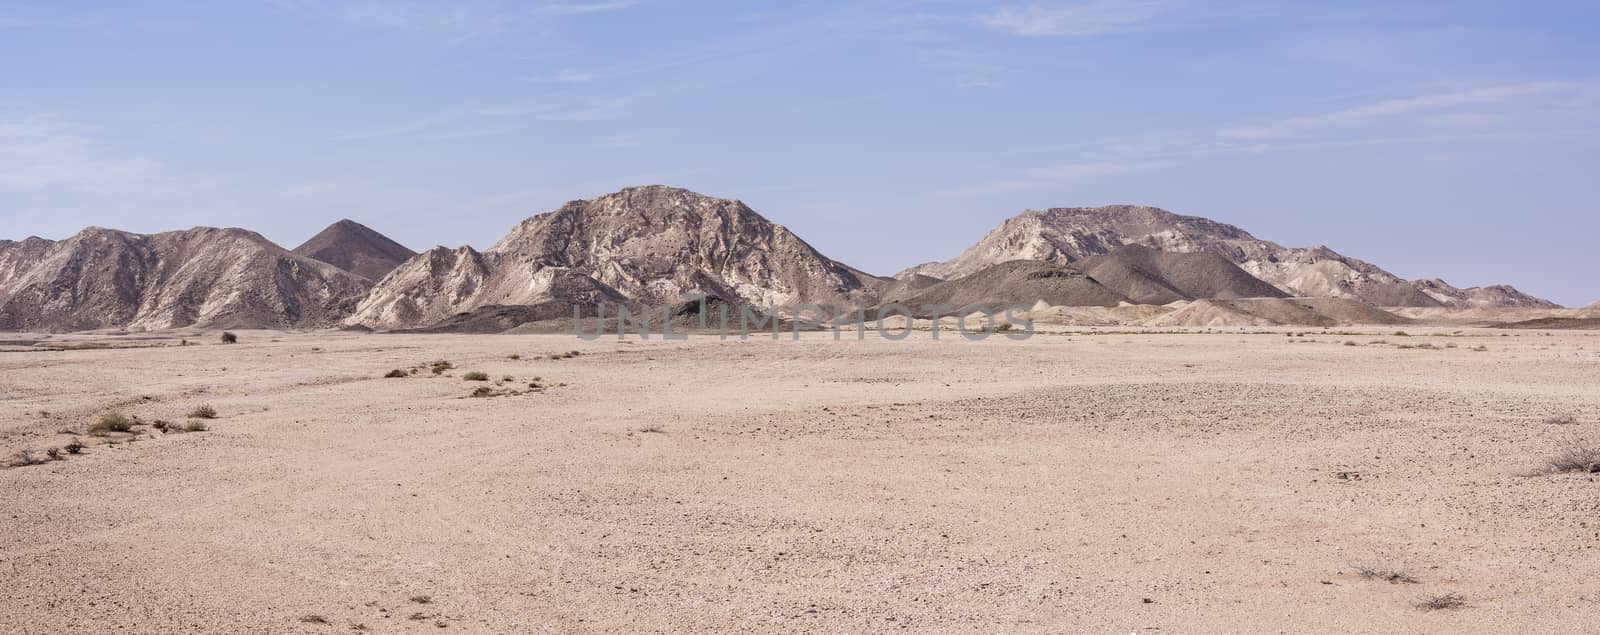 Arid Mountains, Ras Al Jinz, Oman (panoramic) by GABIS